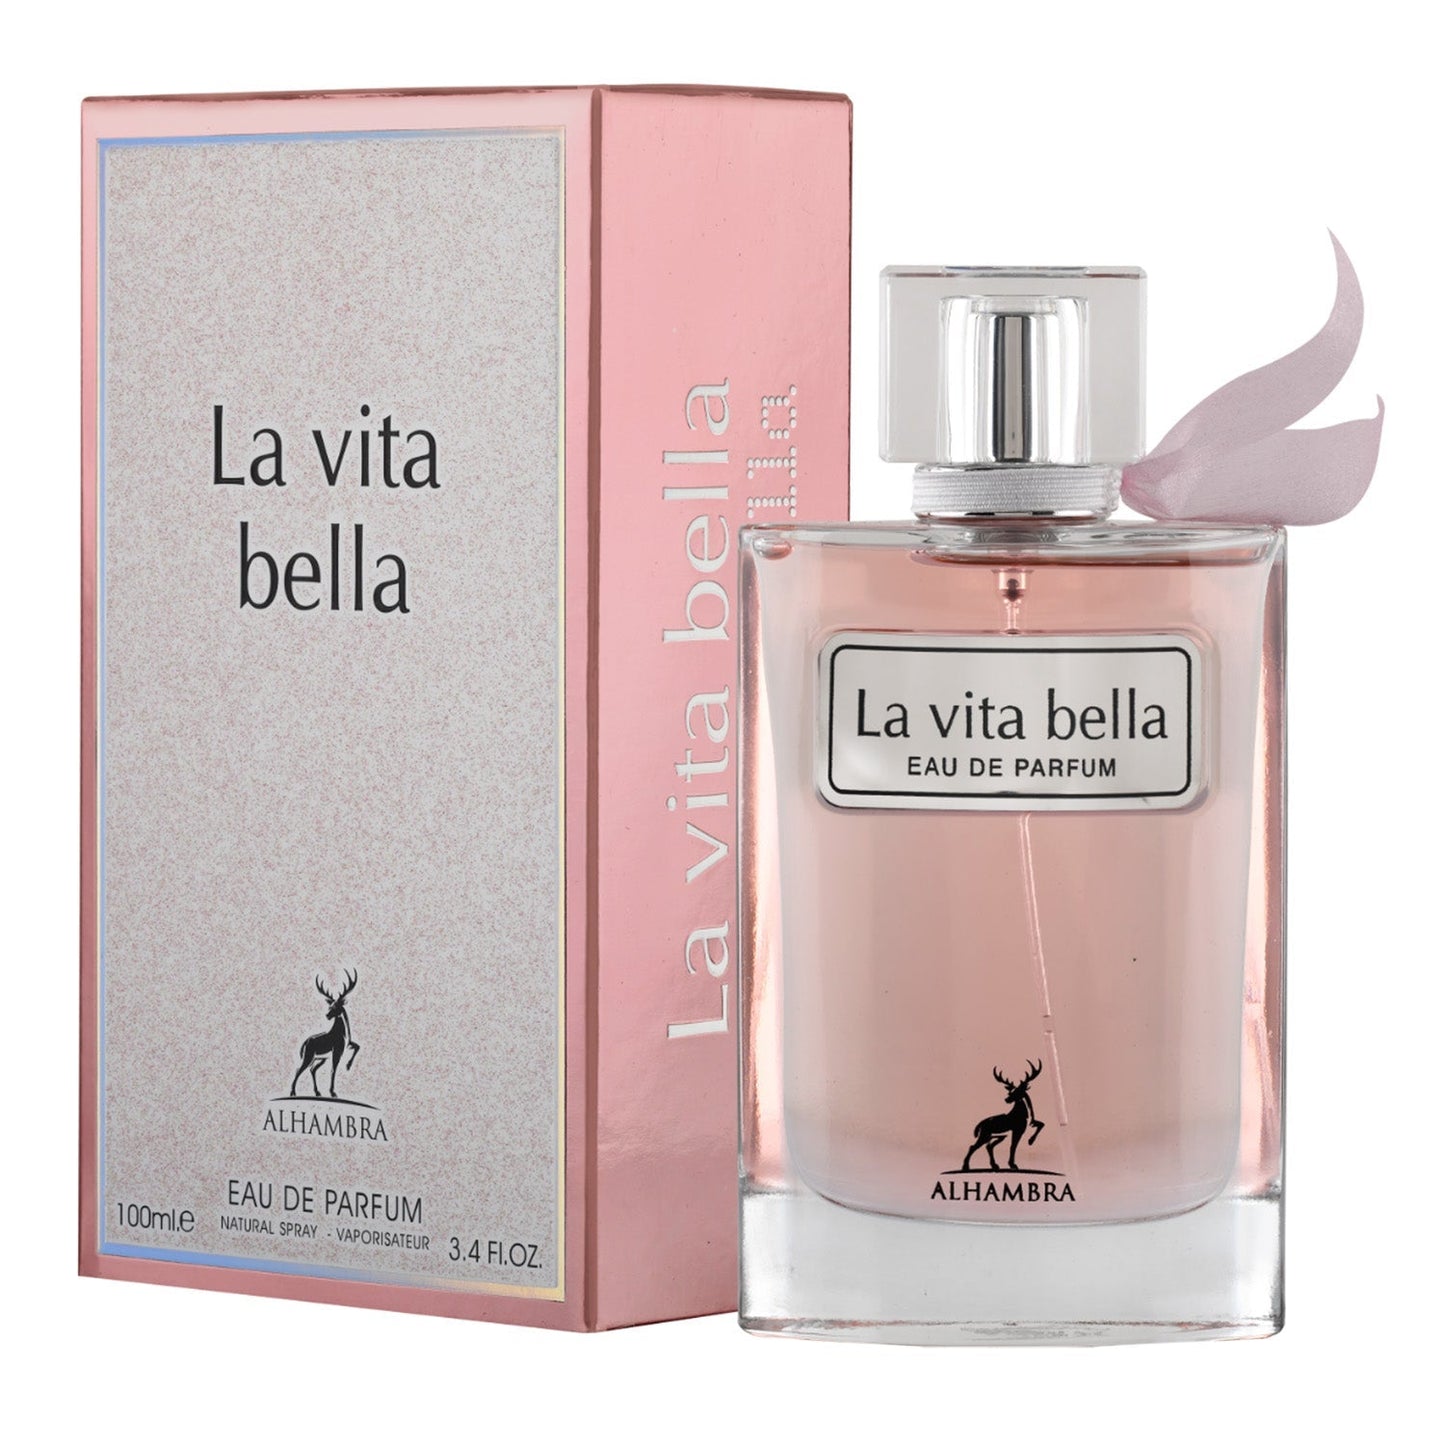 La Vita Bella Eau De Parfum 100ml Alhambra-Perfume Heaven